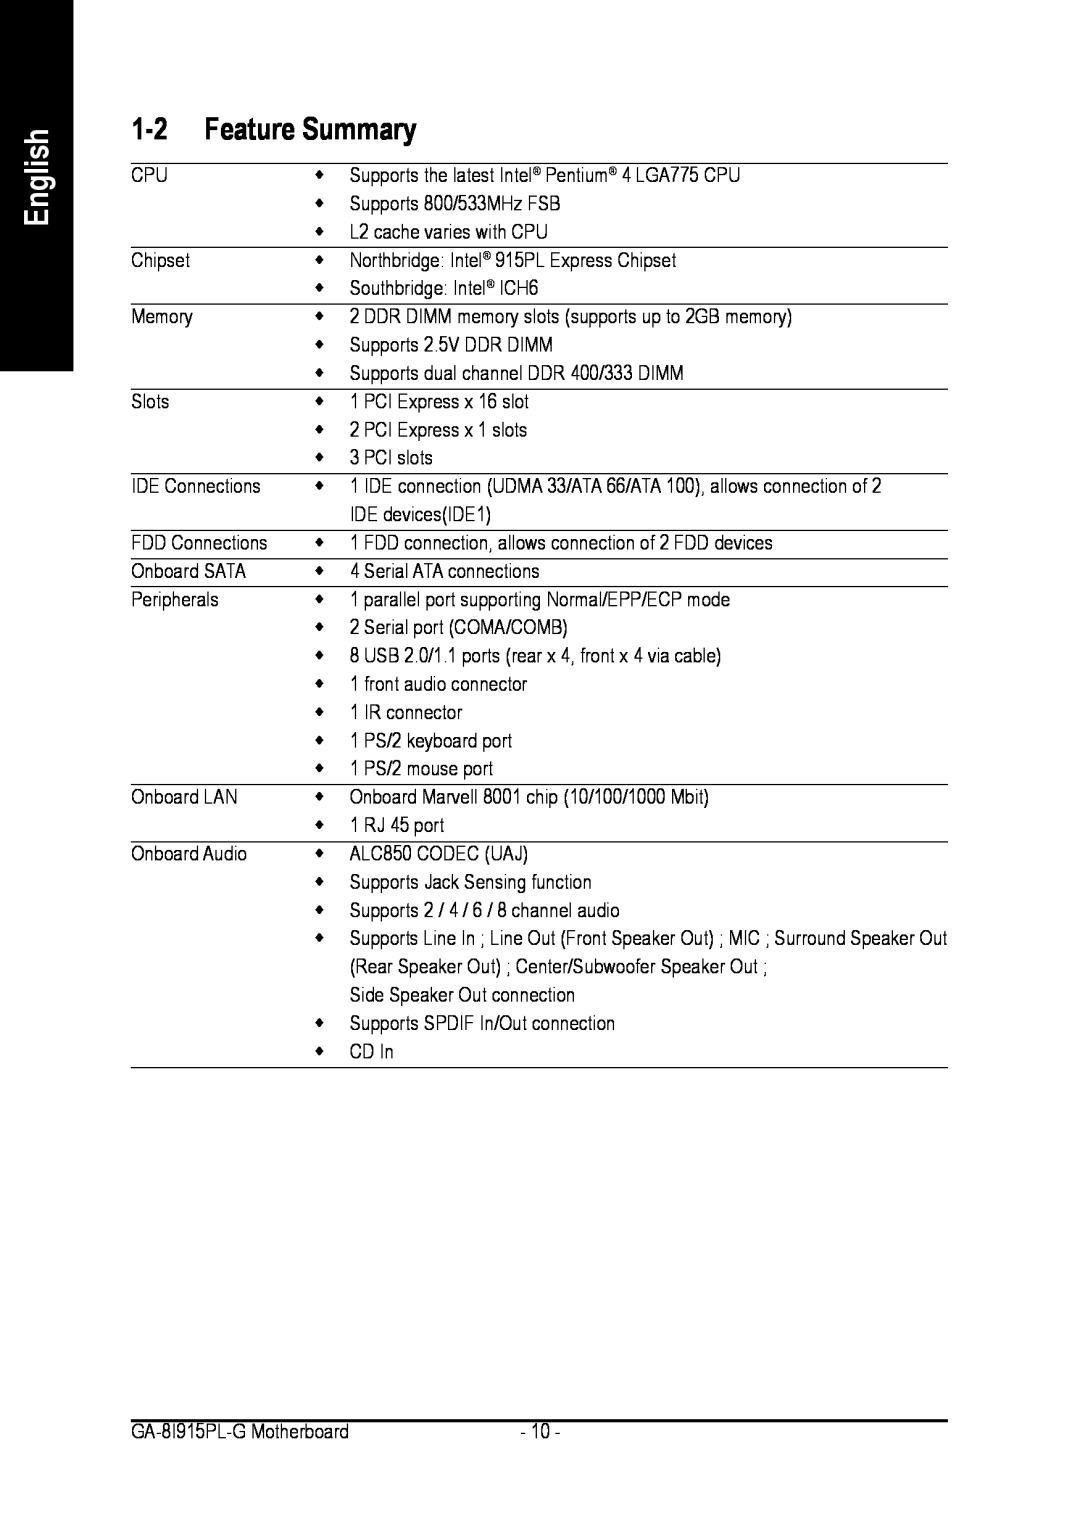 Intel GA-8I915PL-G user manual Feature Summary, English 